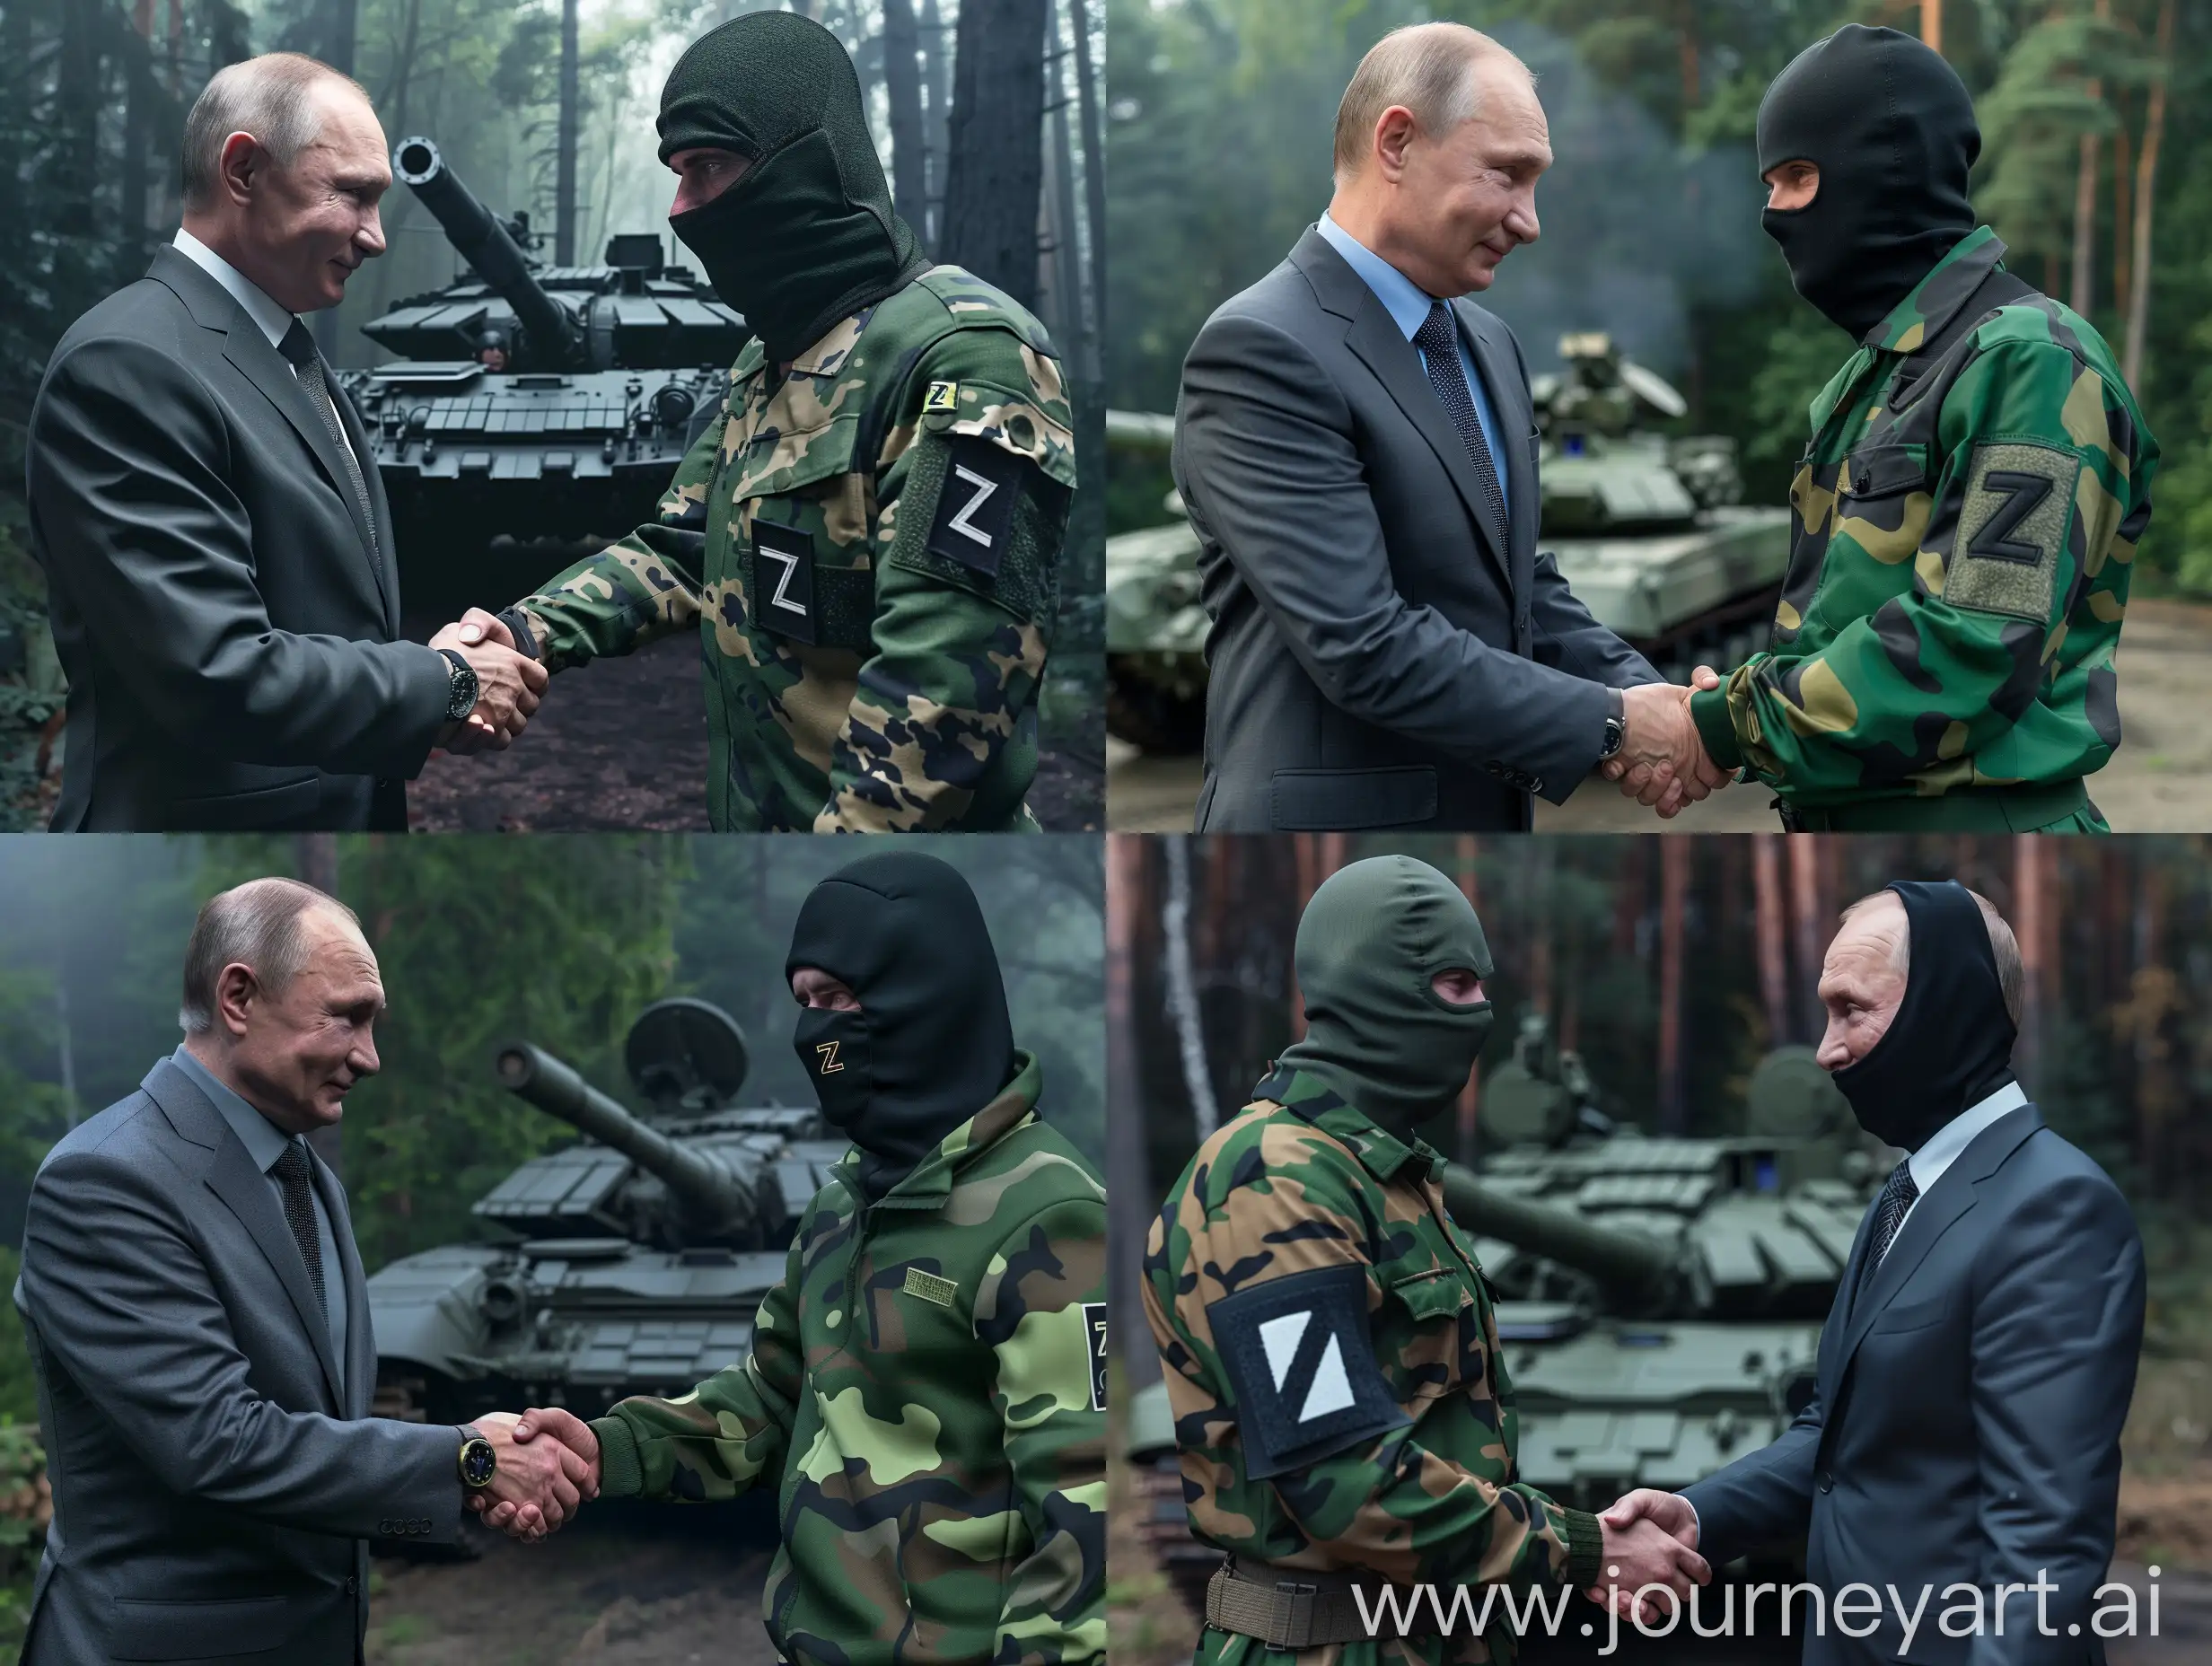 Vladimir-Putin-Meeting-Military-Personnel-Business-Diplomacy-at-the-Tank-Base